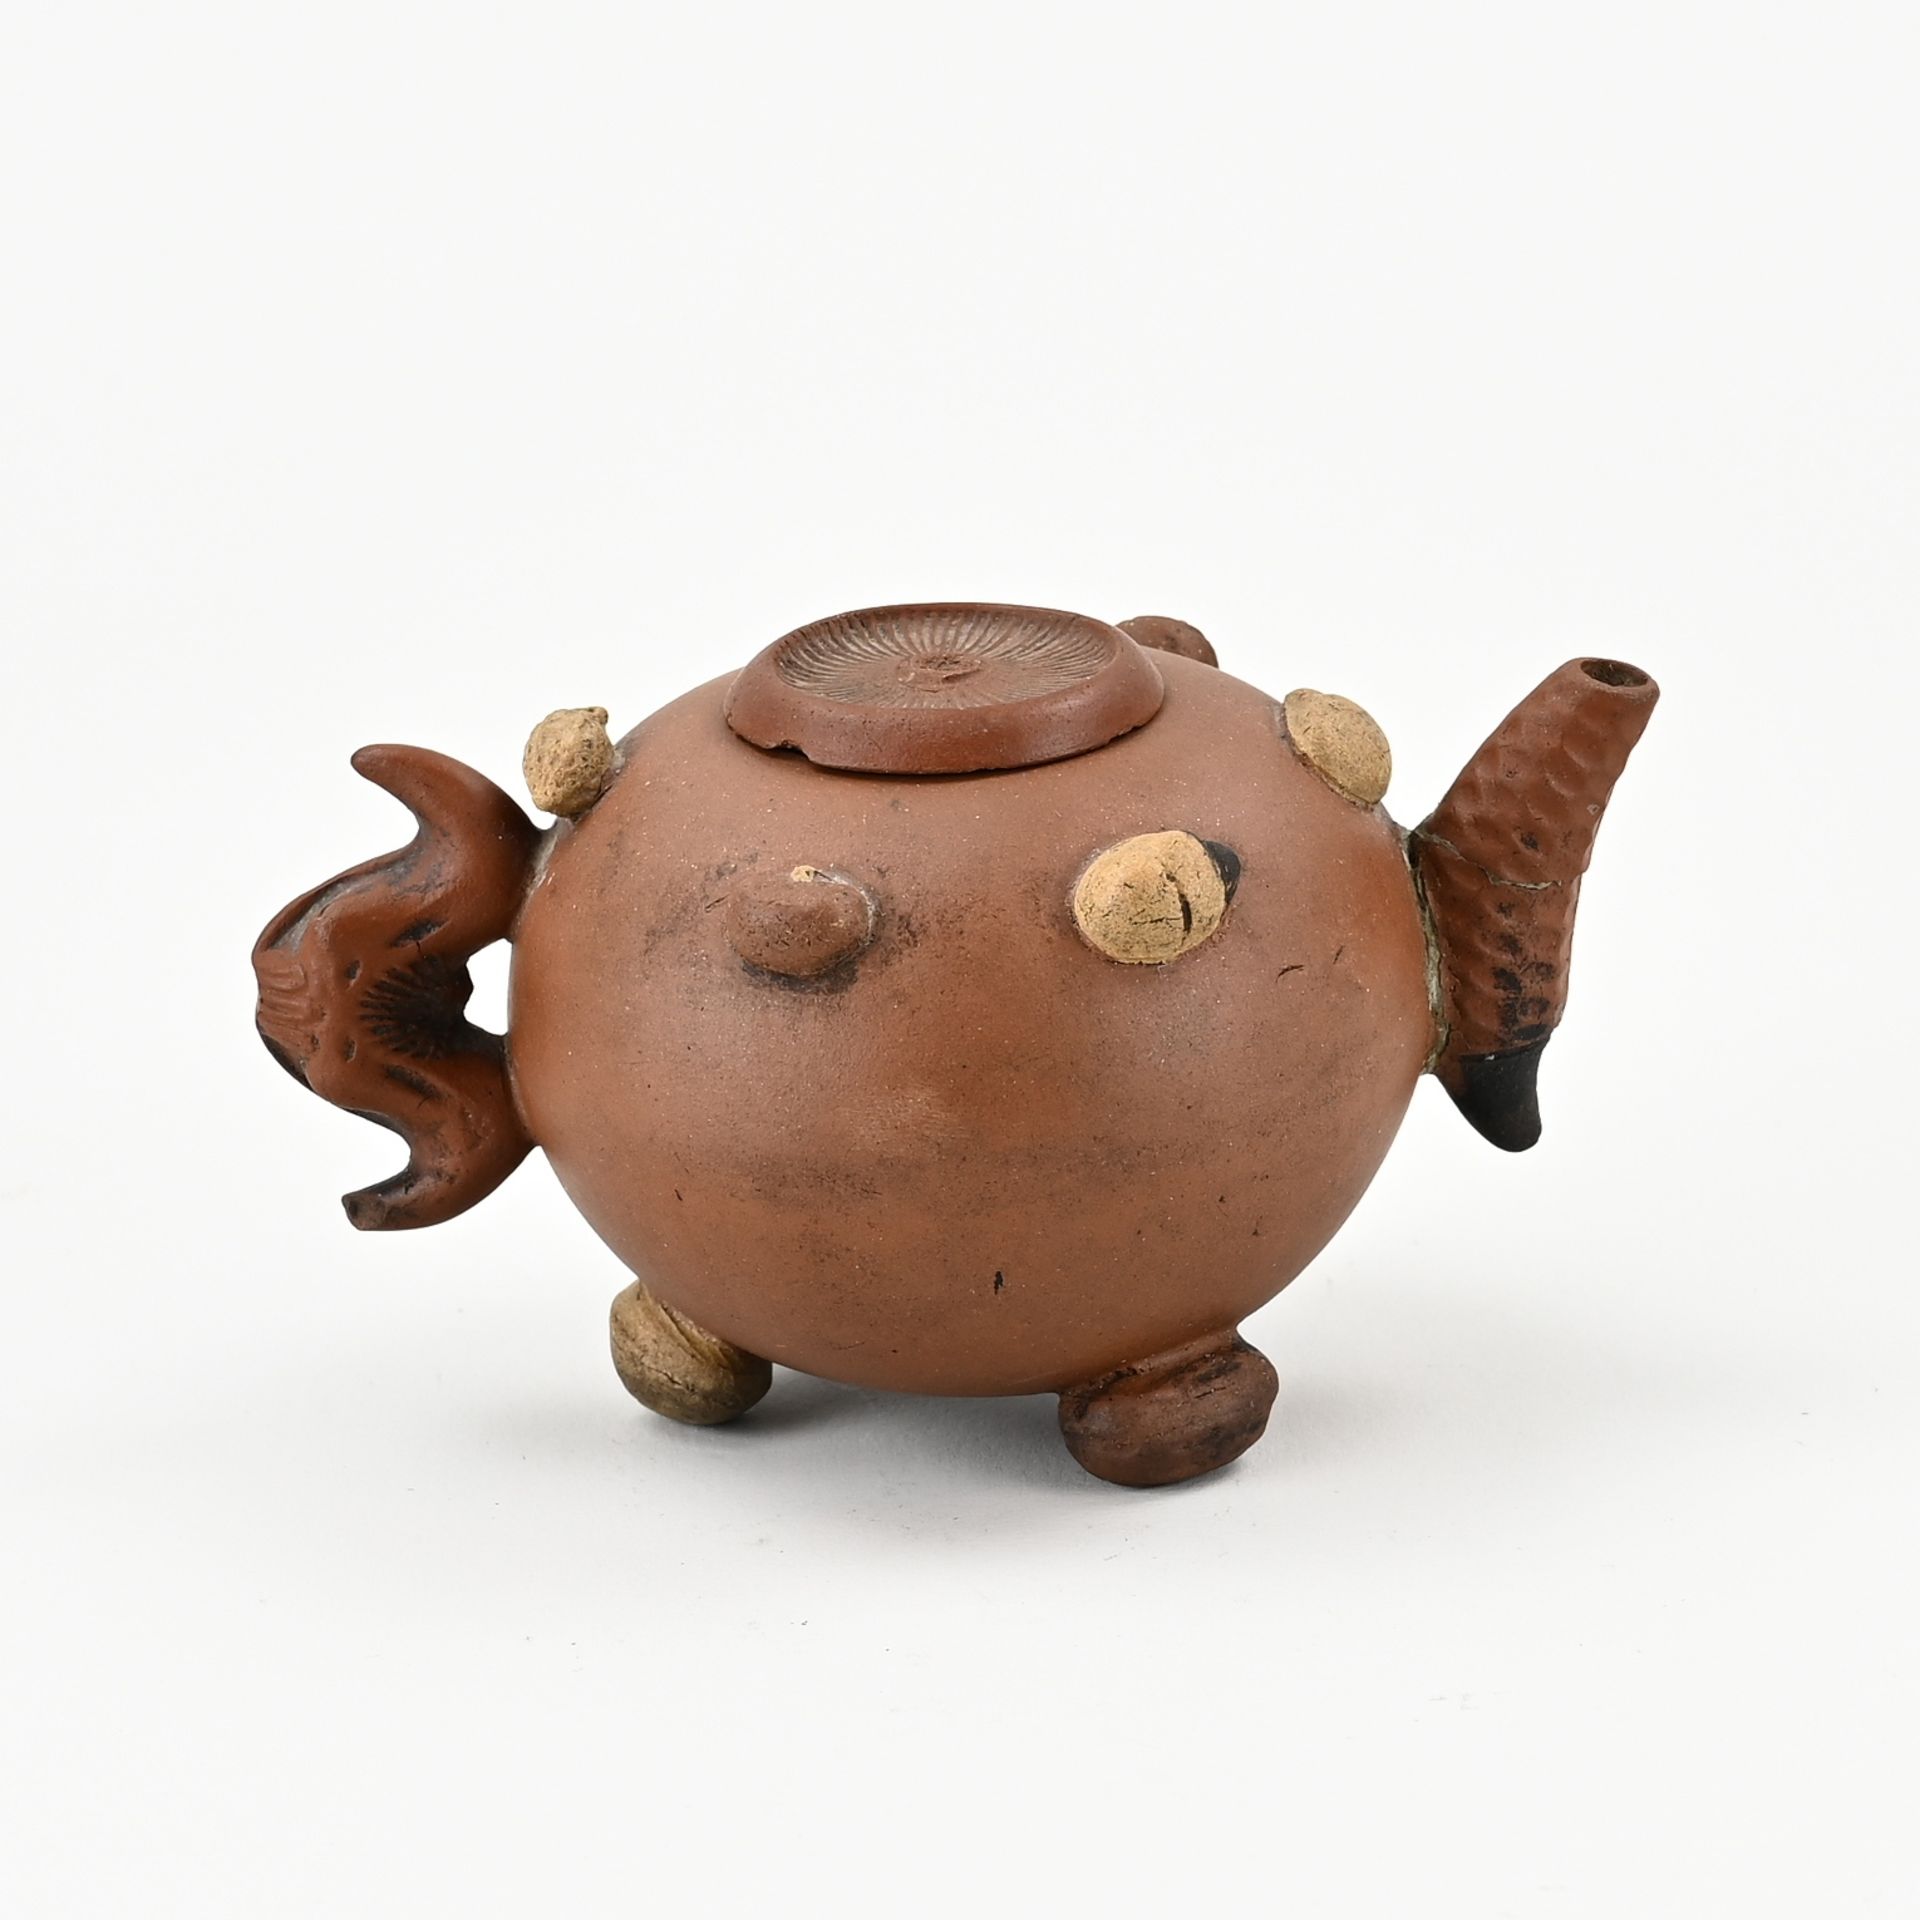 Rare Chinese teapot - Image 2 of 3